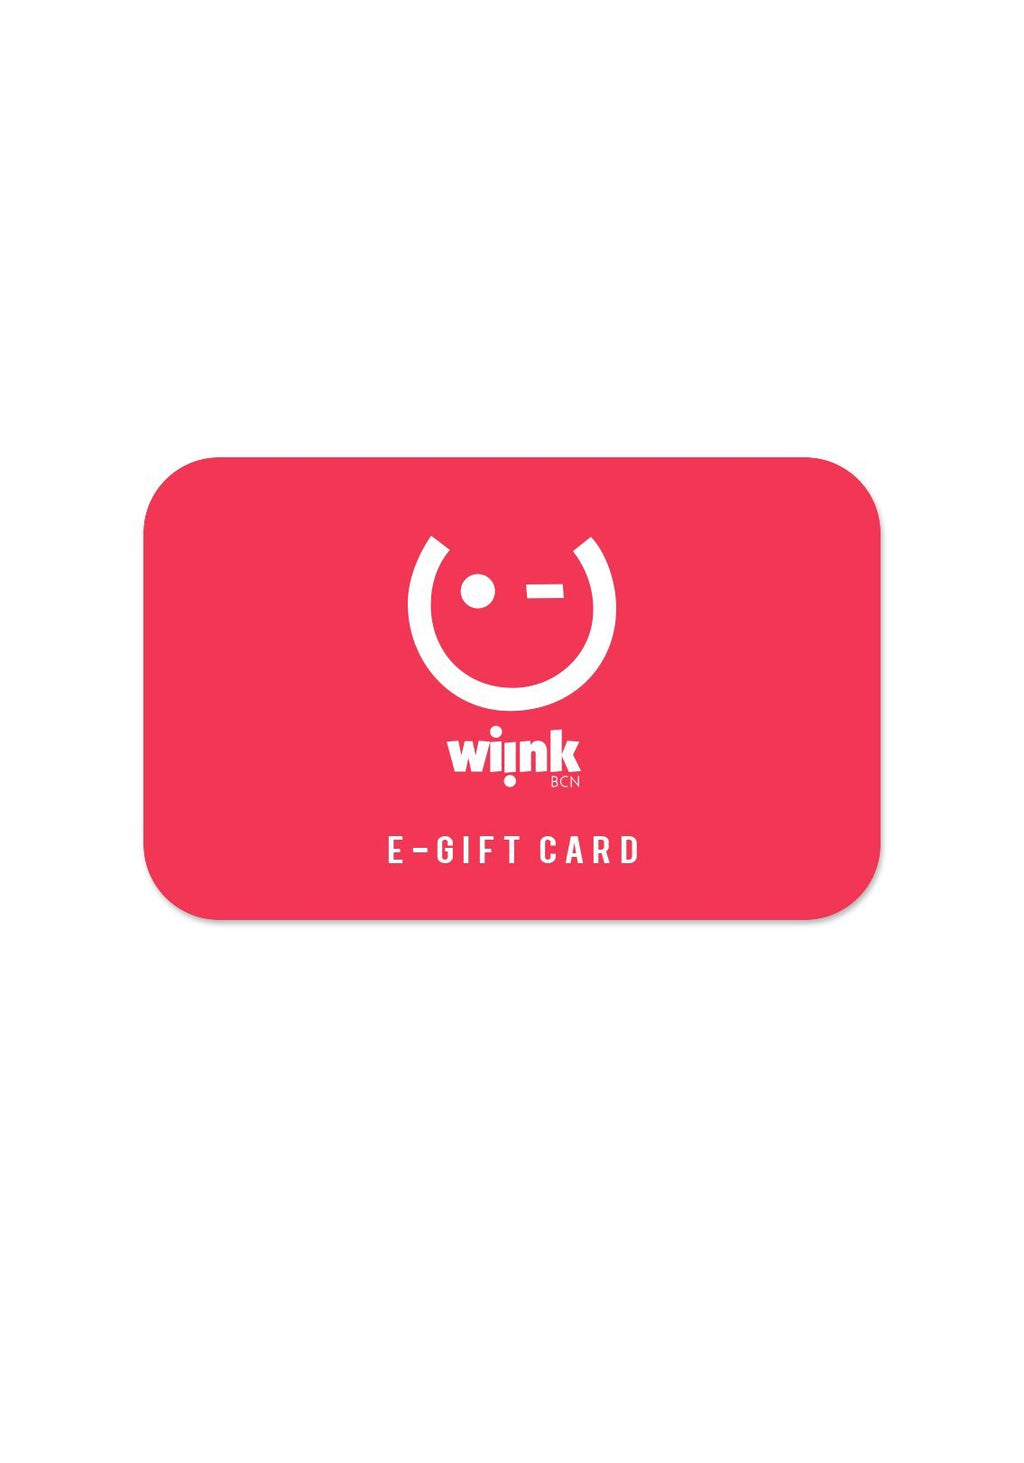 Wiink E-Gift Card - wiinkbcn